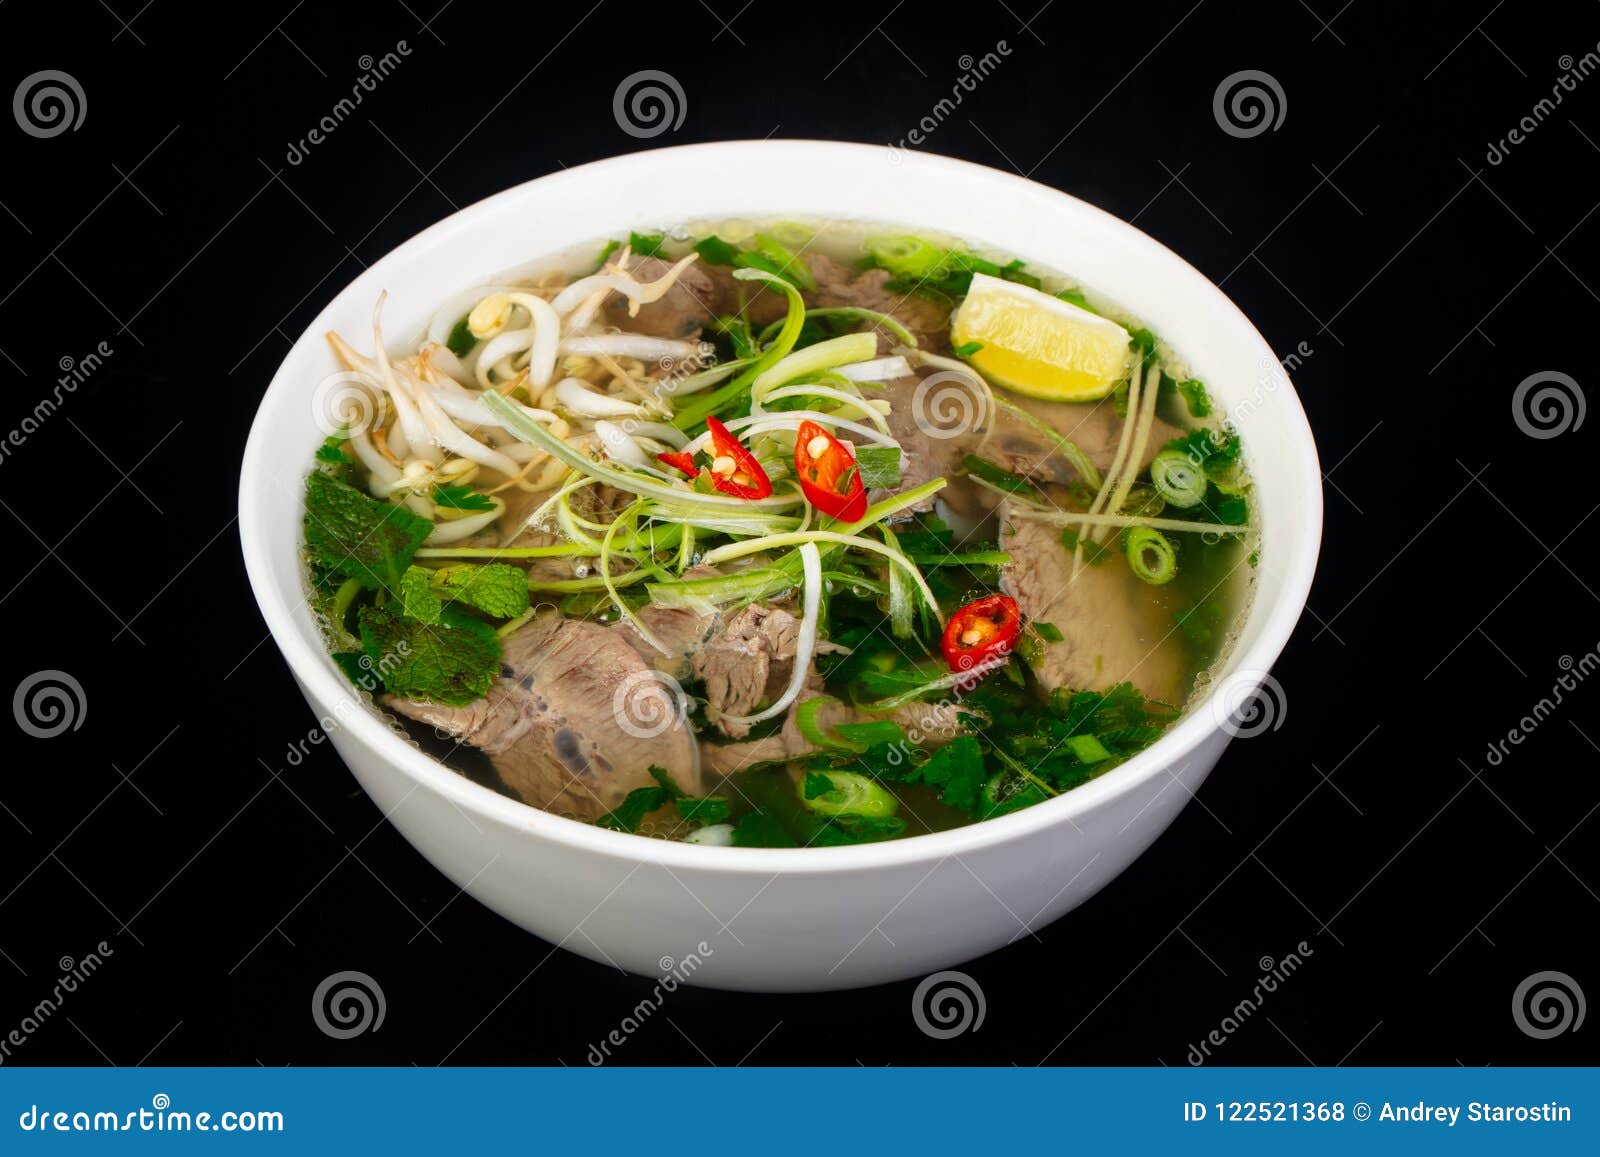 vietnamese cuisine pho bo soup